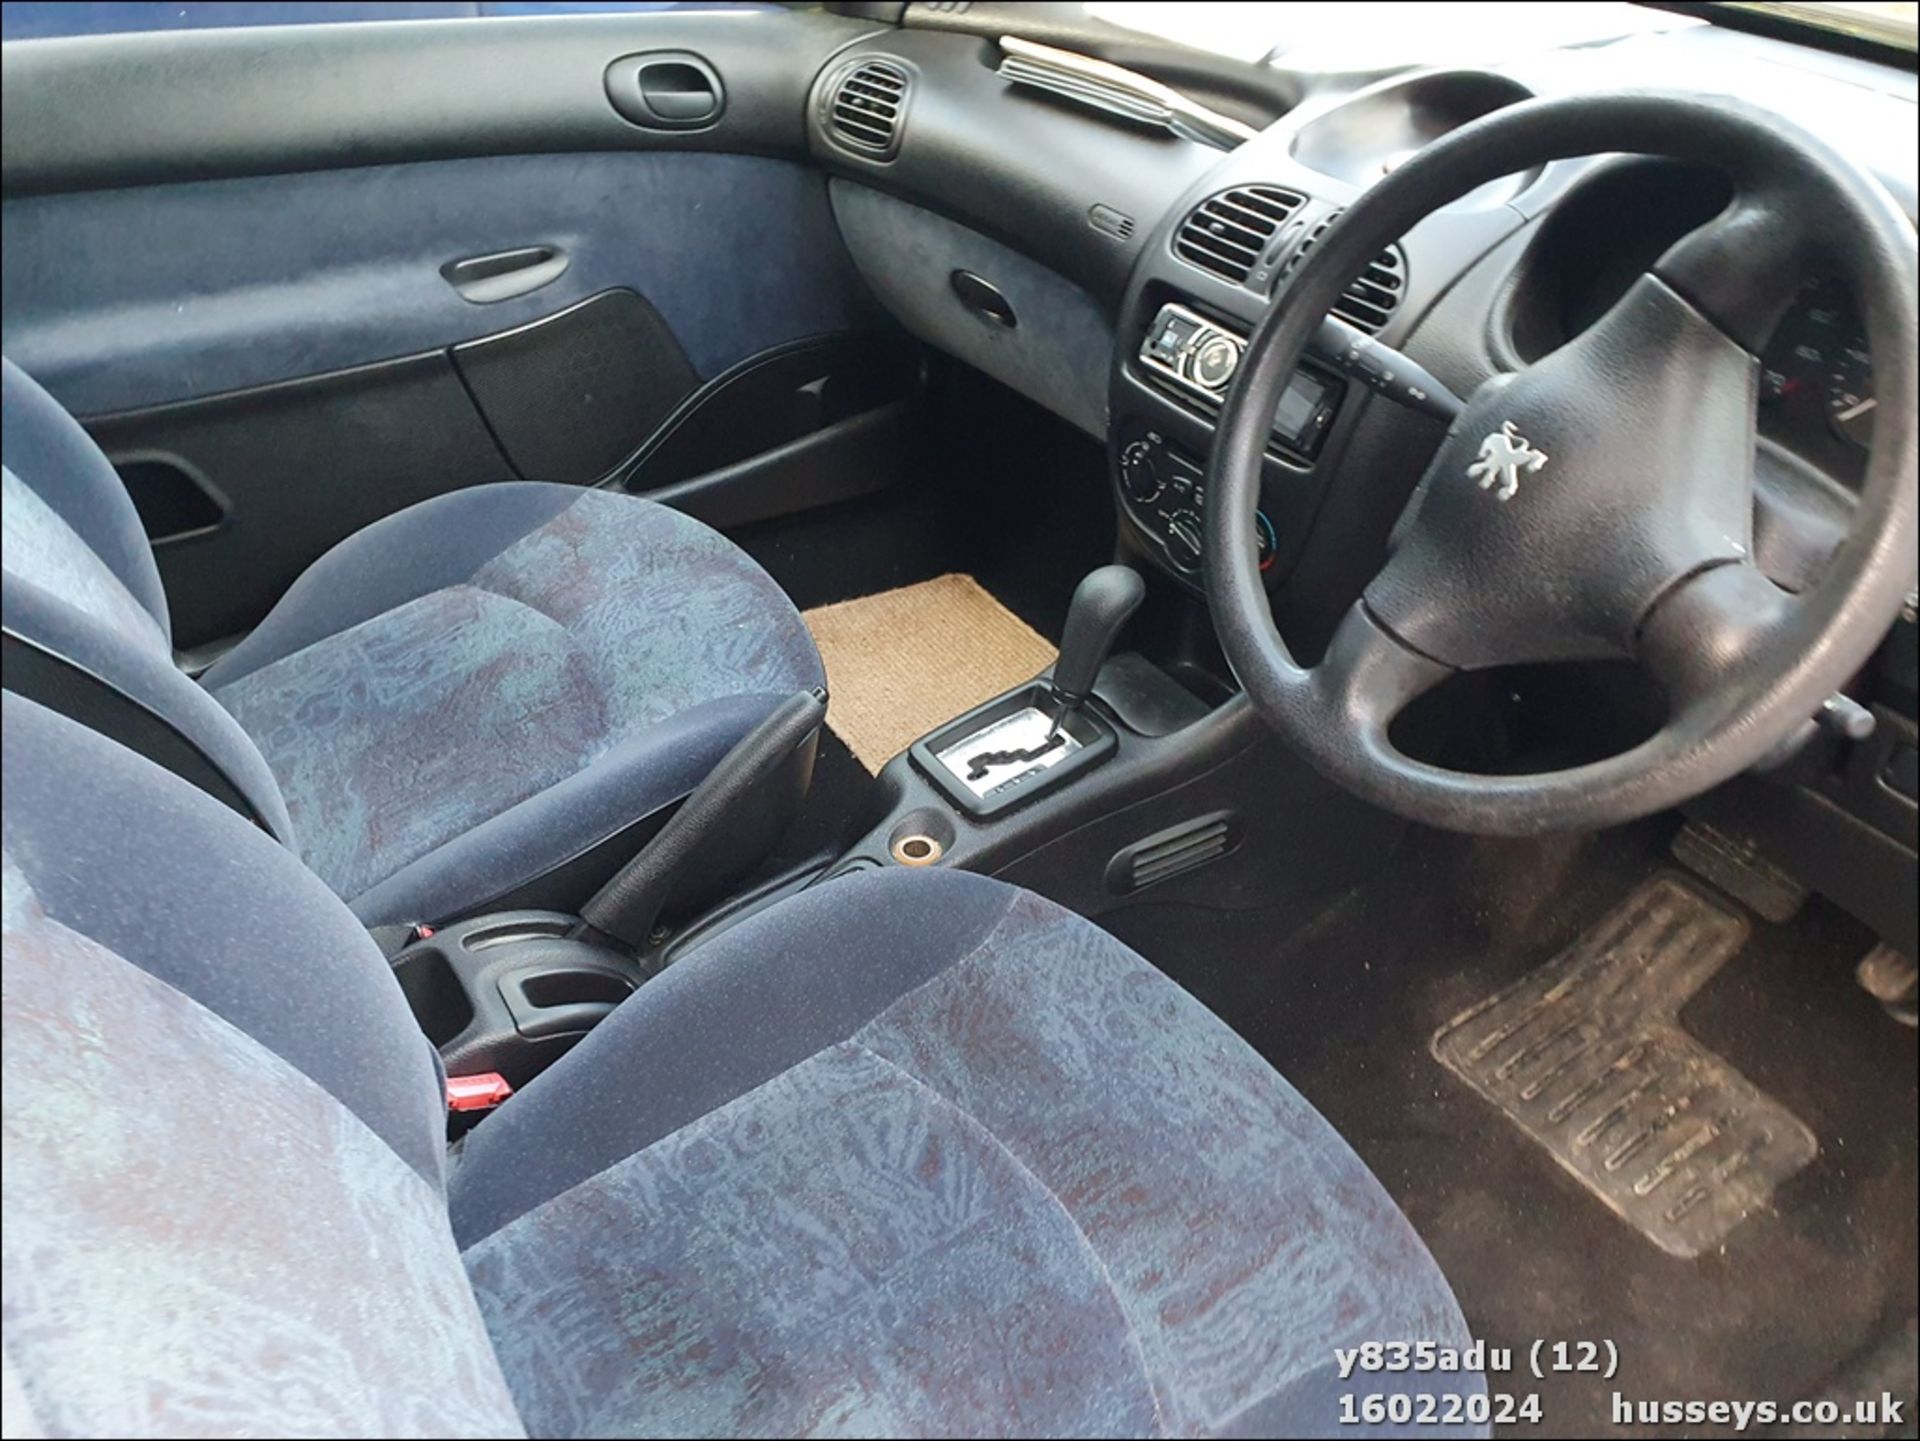 2001 PEUGEOT 206 LX AUTO - 1360cc 3dr Hatchback (Blue, 85k) - Image 13 of 22